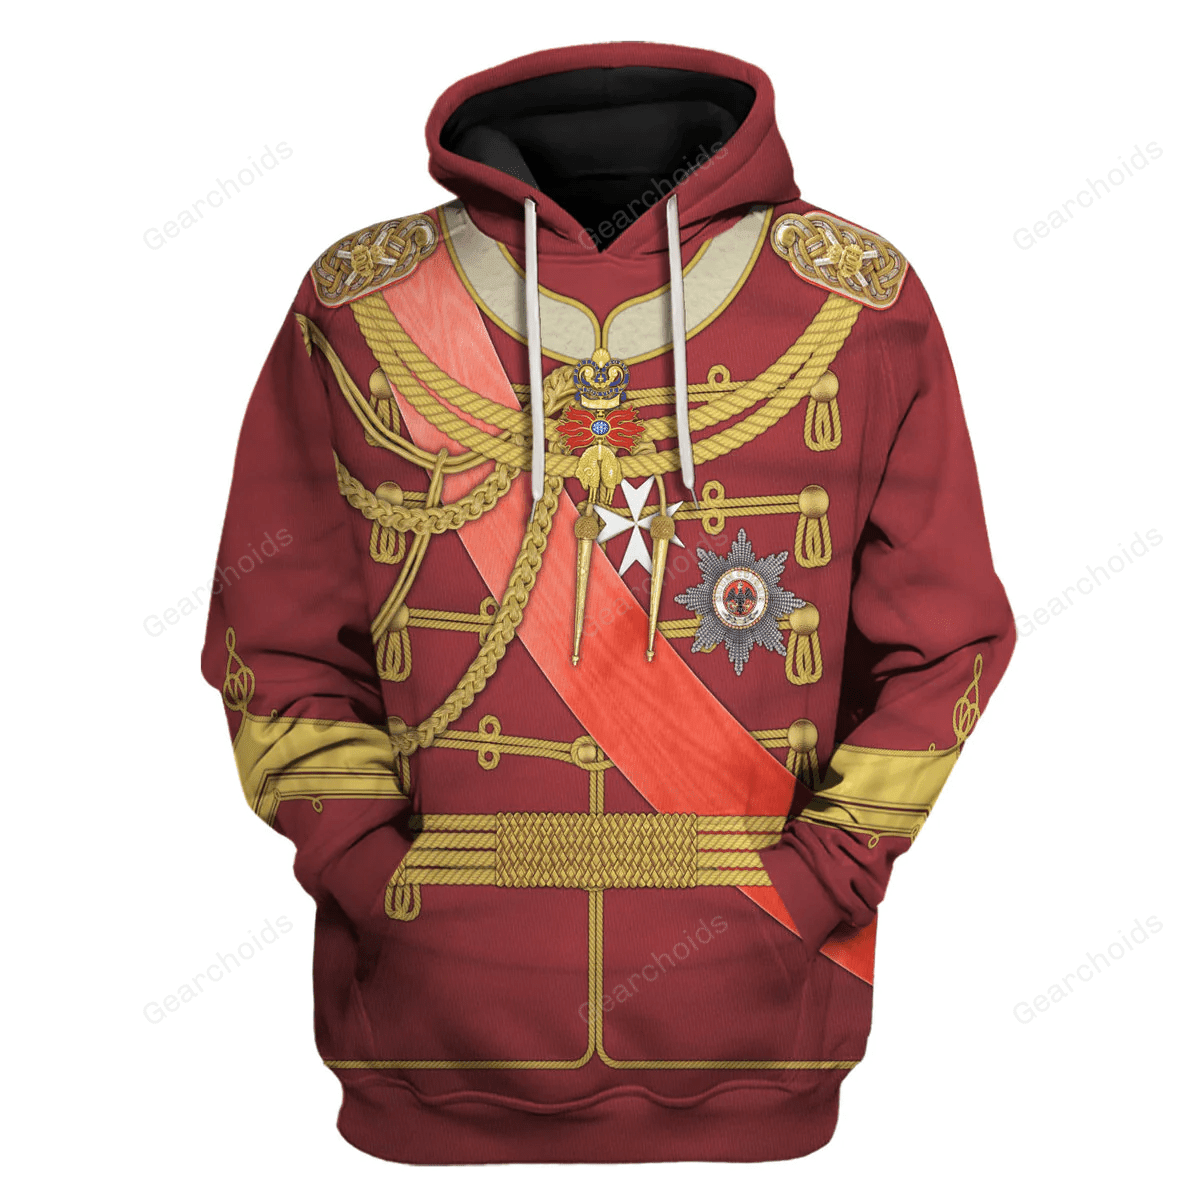 Gearchoids Kaiser Wilhelm II Uniform Austria-Hungary Costume Hoodie Sweatshirt T-Shirt Tracksuit